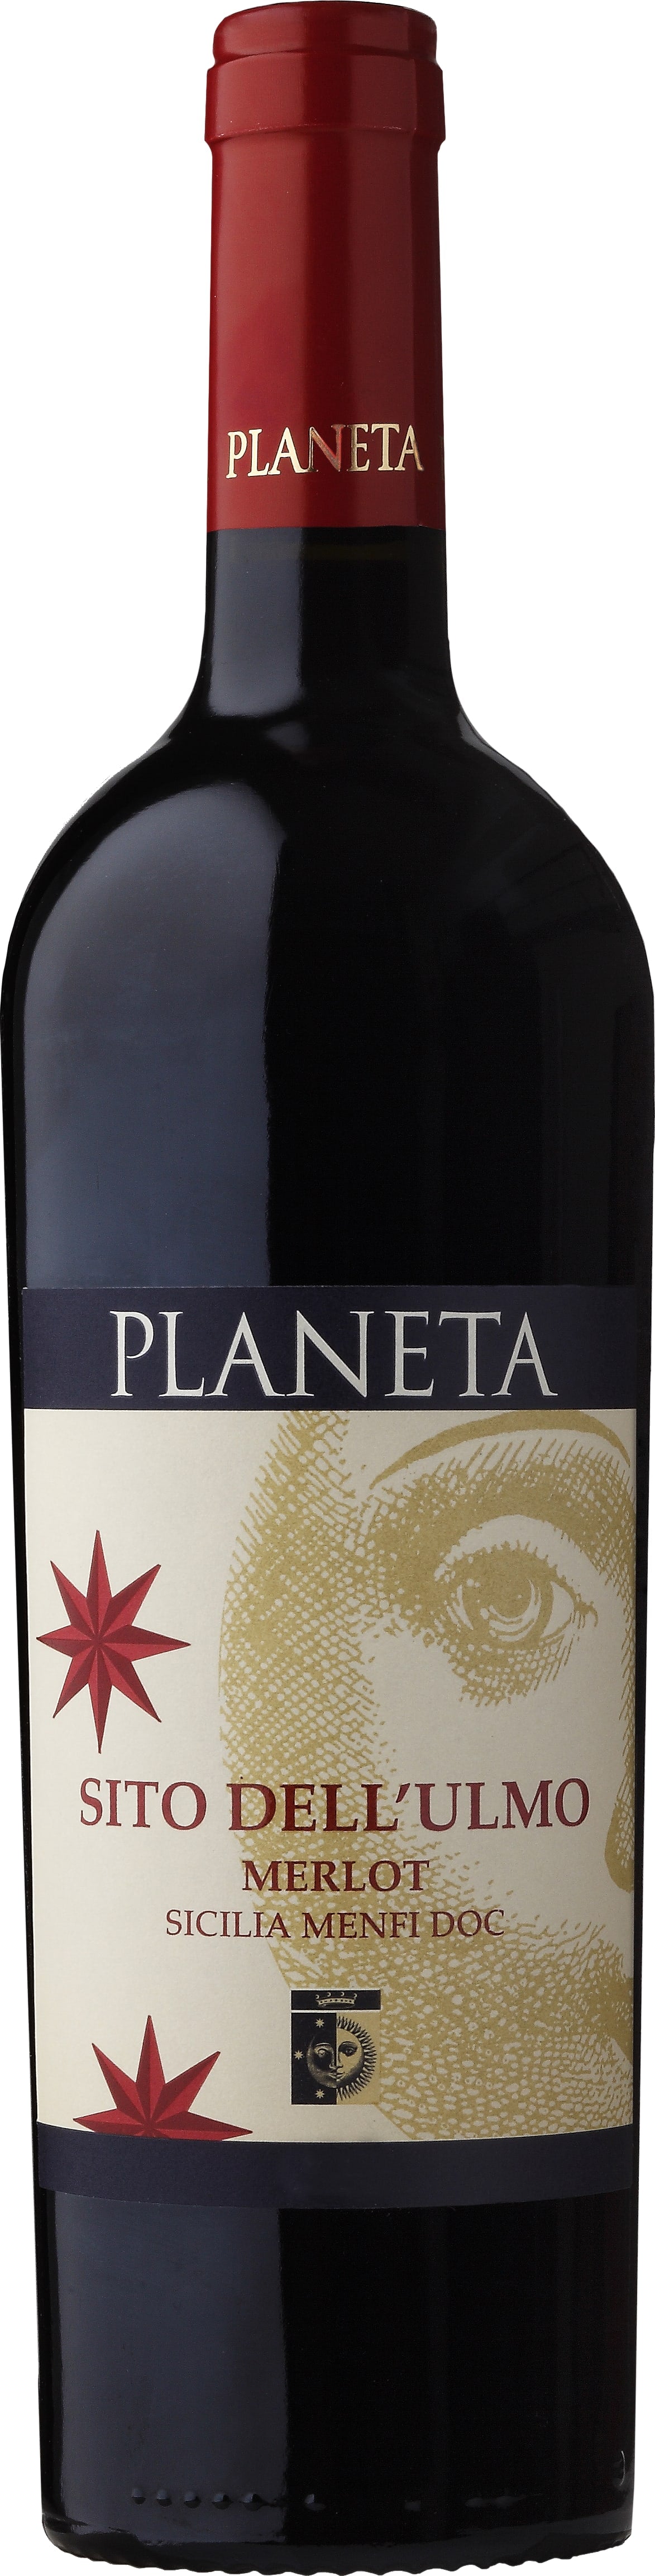 Planeta Merlot Sito dell'Ulmo 2019 75cl - Buy Planeta Wines from GREAT WINES DIRECT wine shop